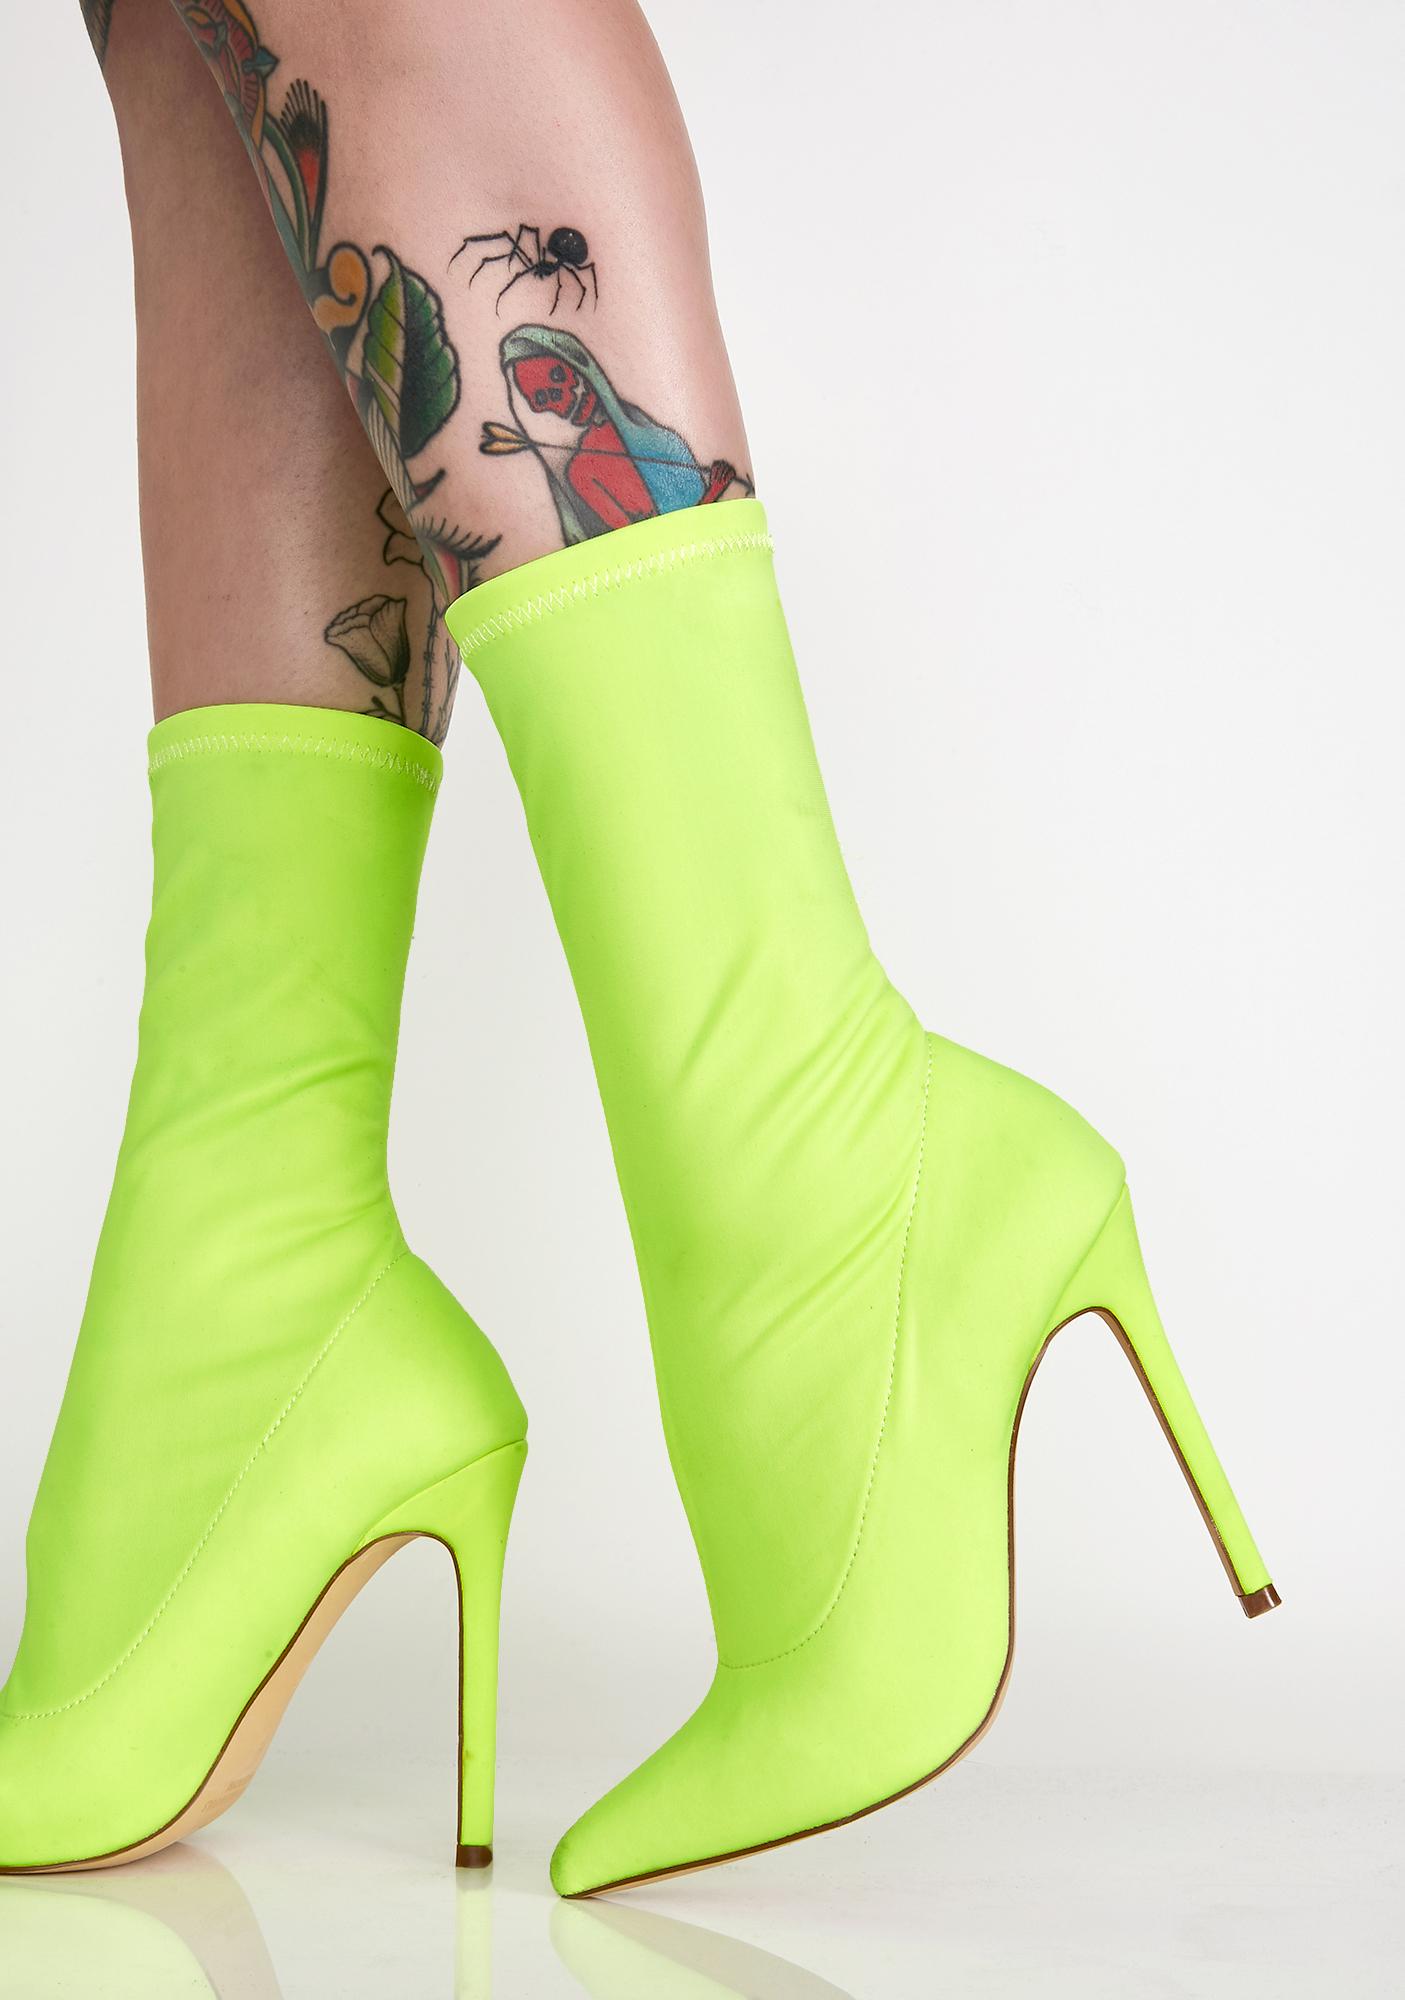 neon yellow booties